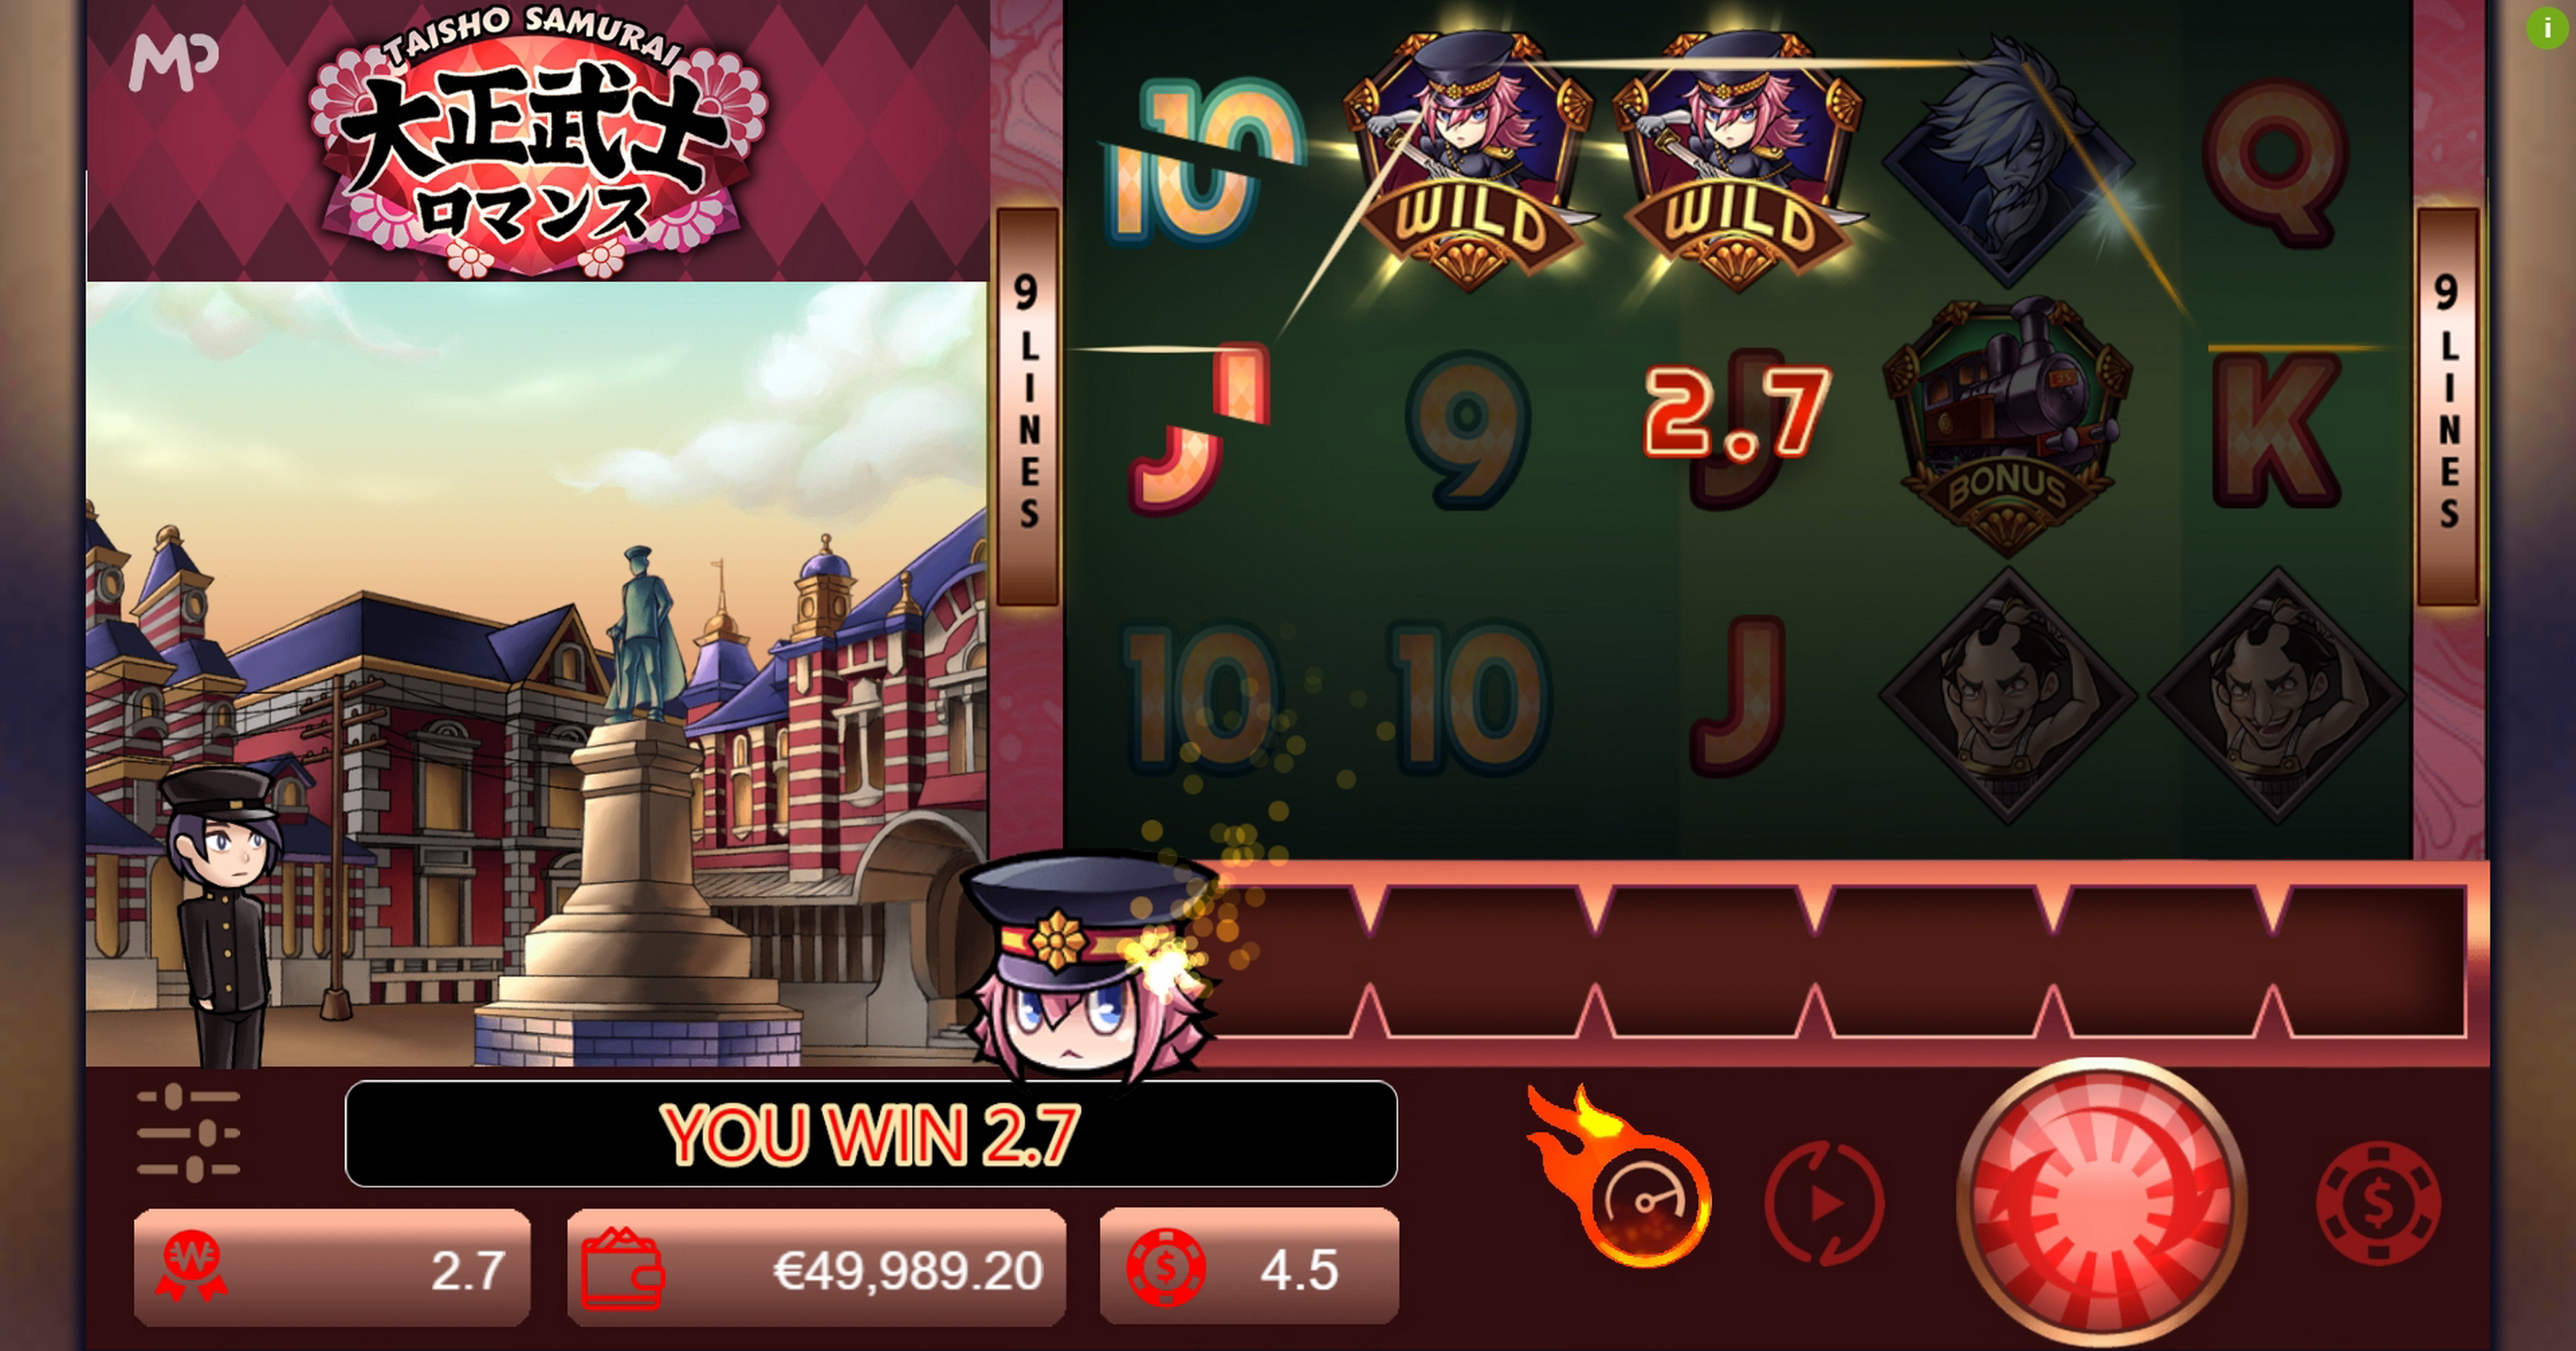 Win Money in Taisho Samurai Free Slot Game by Manna Play